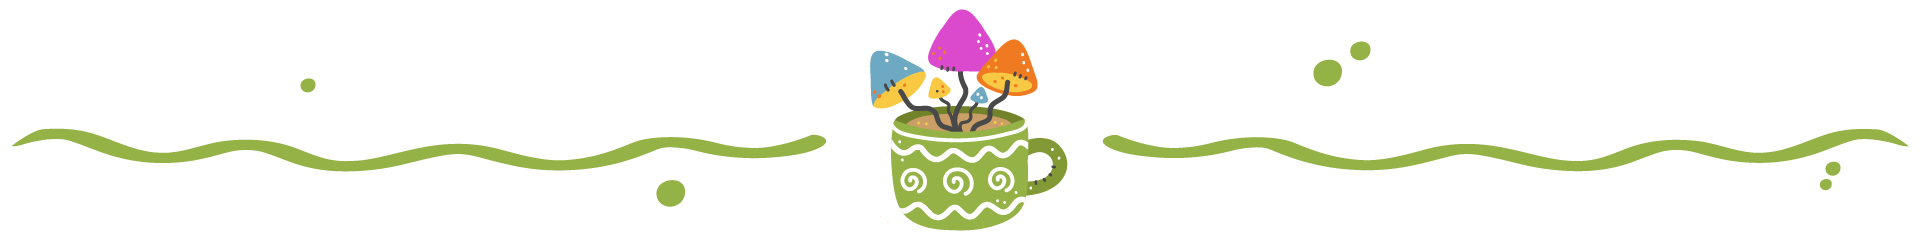 mushrooms in a cup